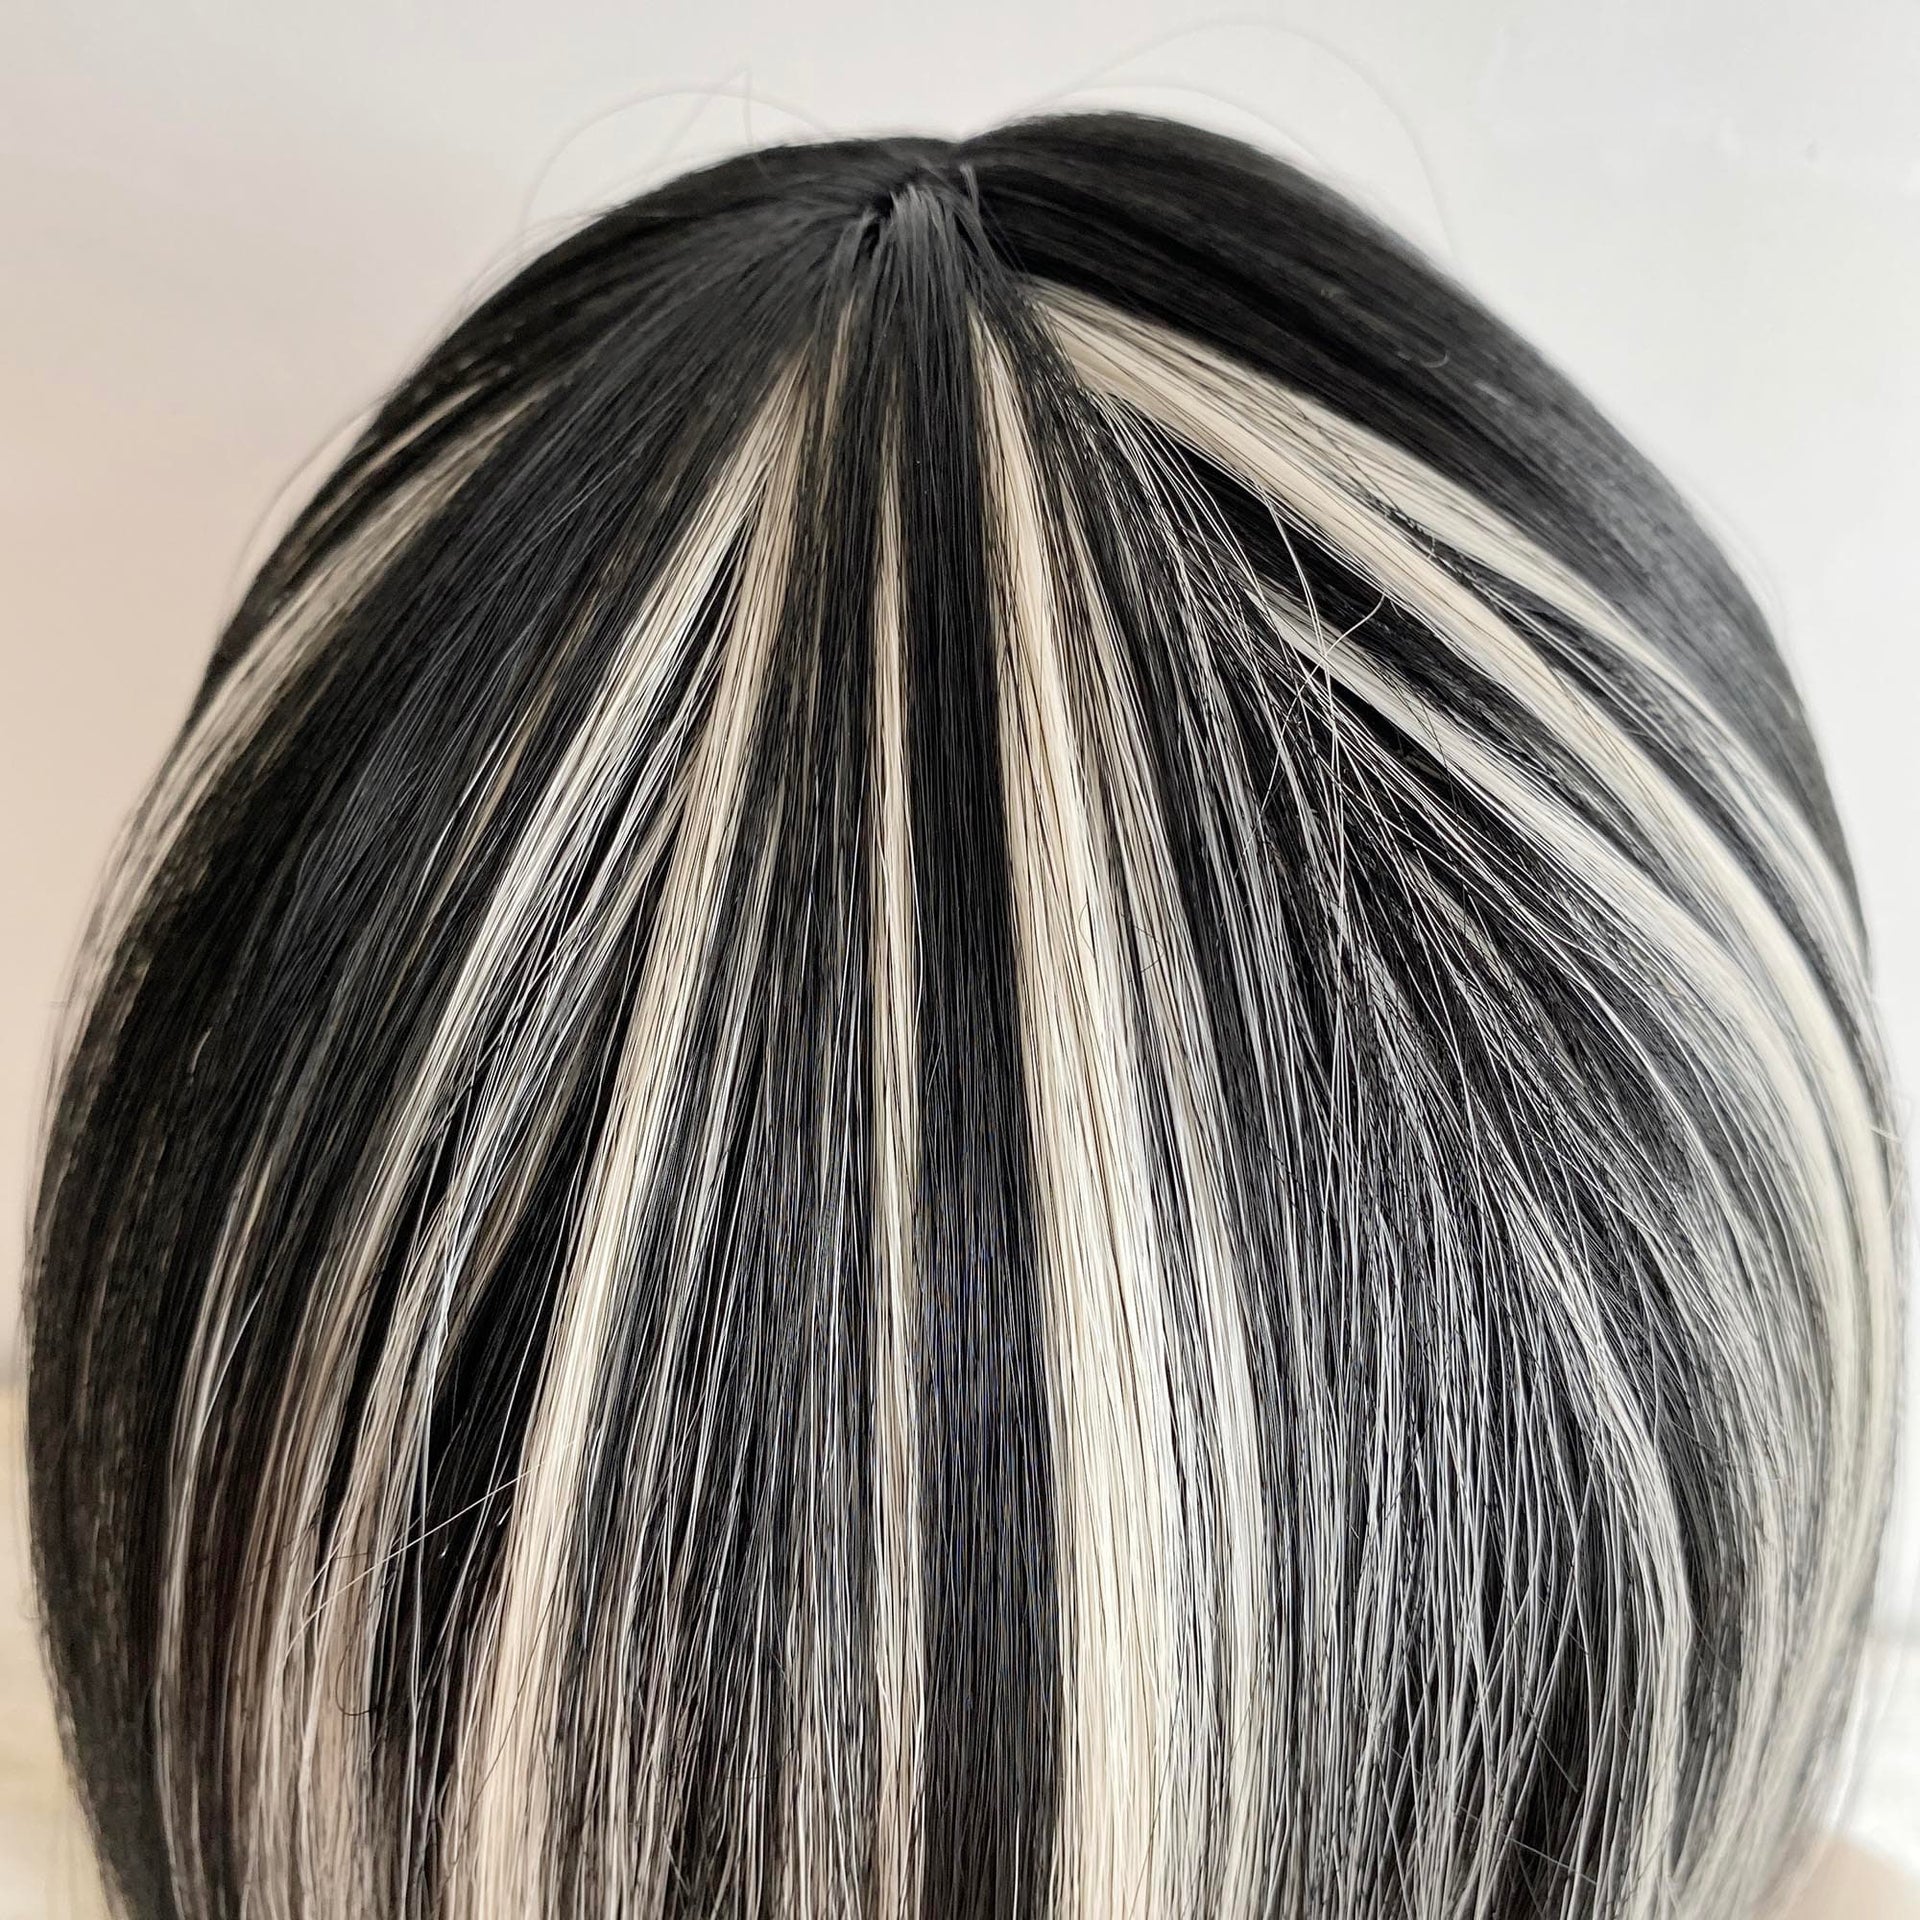 nevermindyrhead Women Skunk Stripe Wig, Black And 613 Blonde Short Straight Bob Side Part Wig